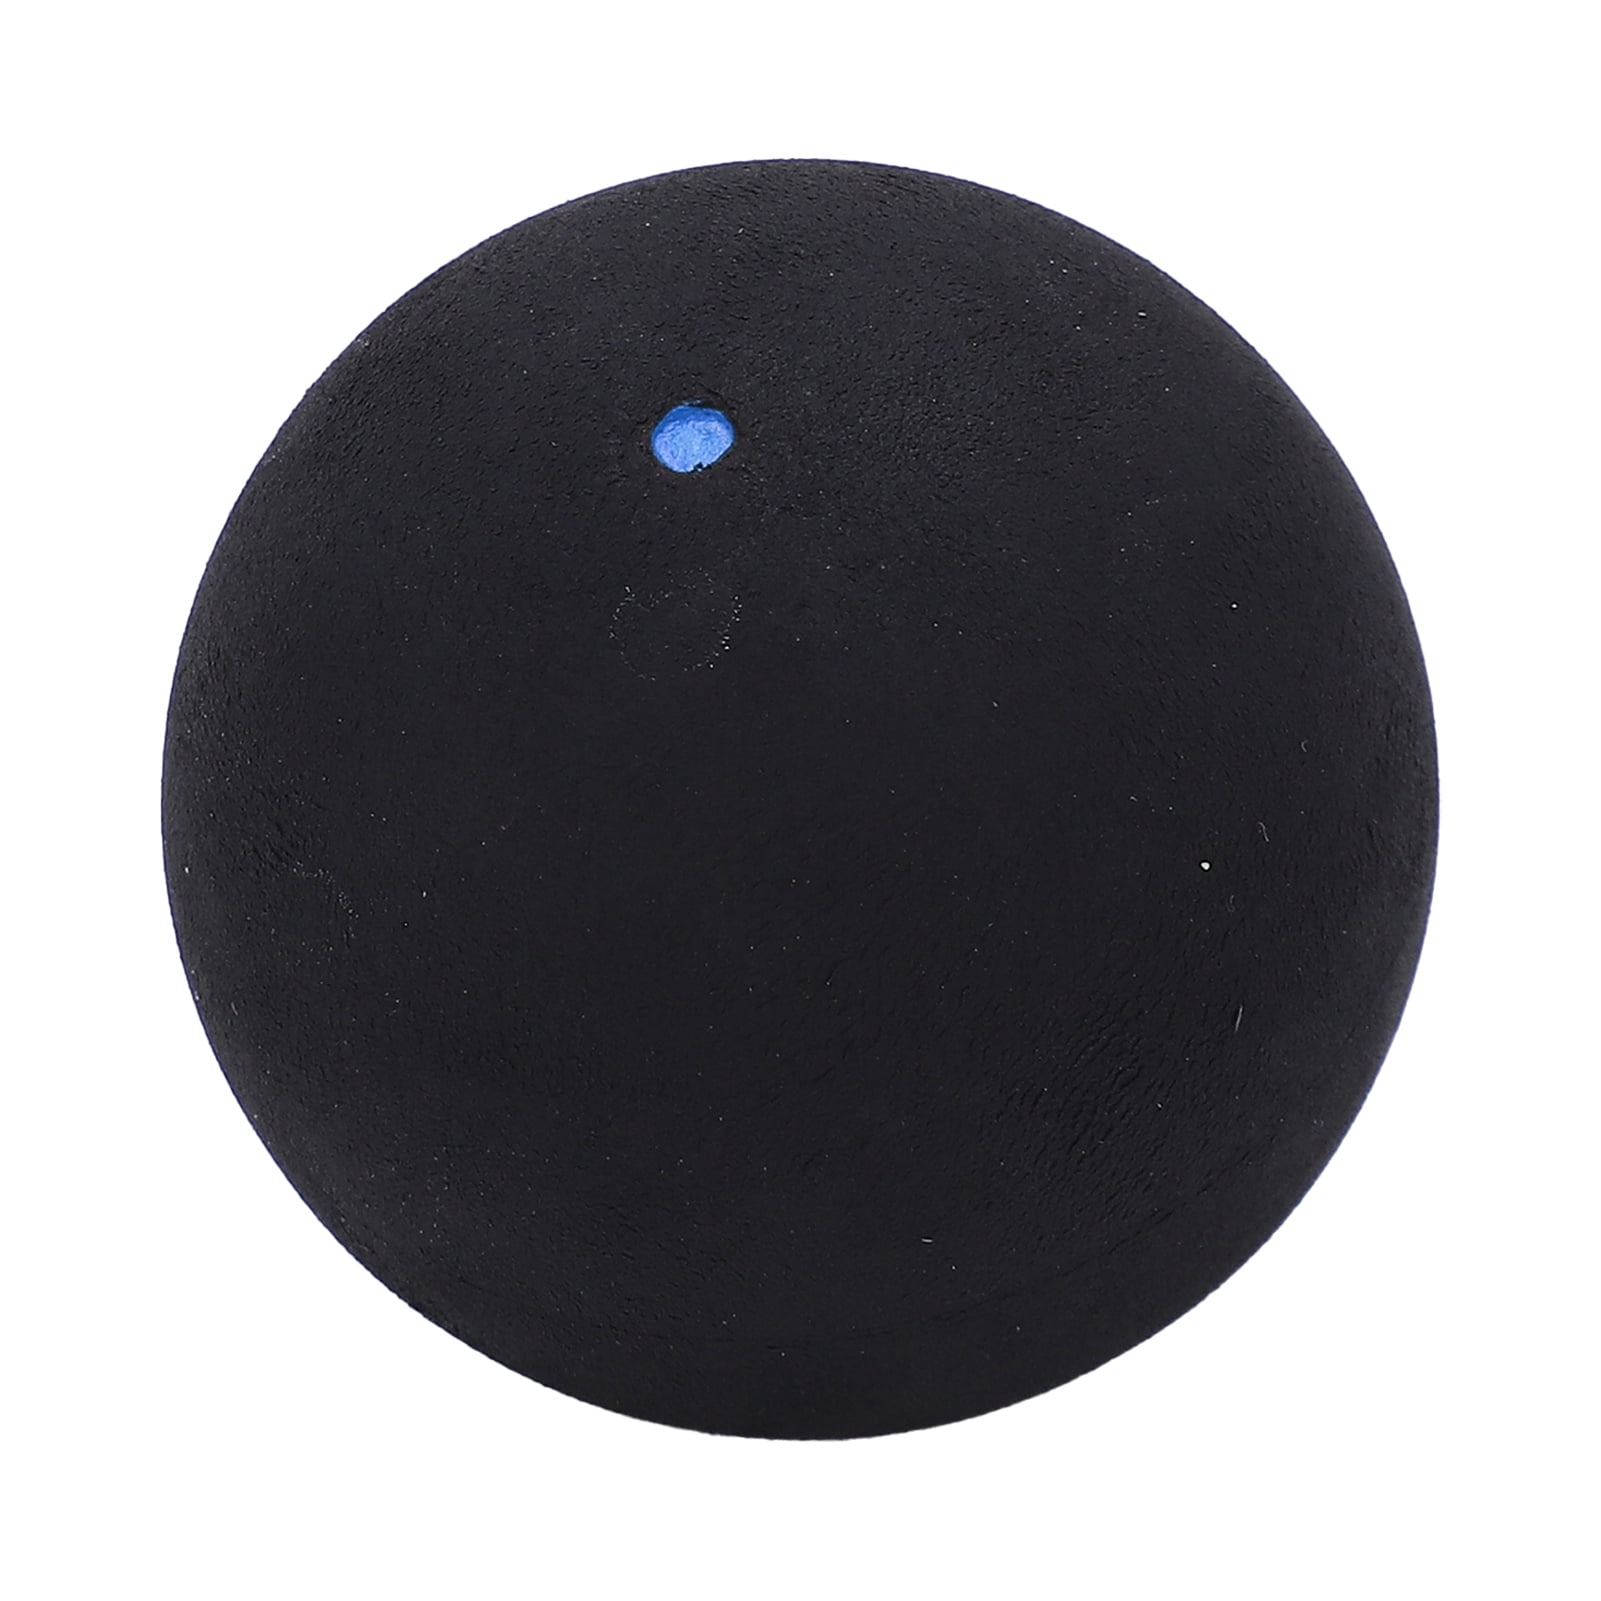 3Pcs Squash Balls Single Blue Dot Generic Rubber for Practice Training Gym 